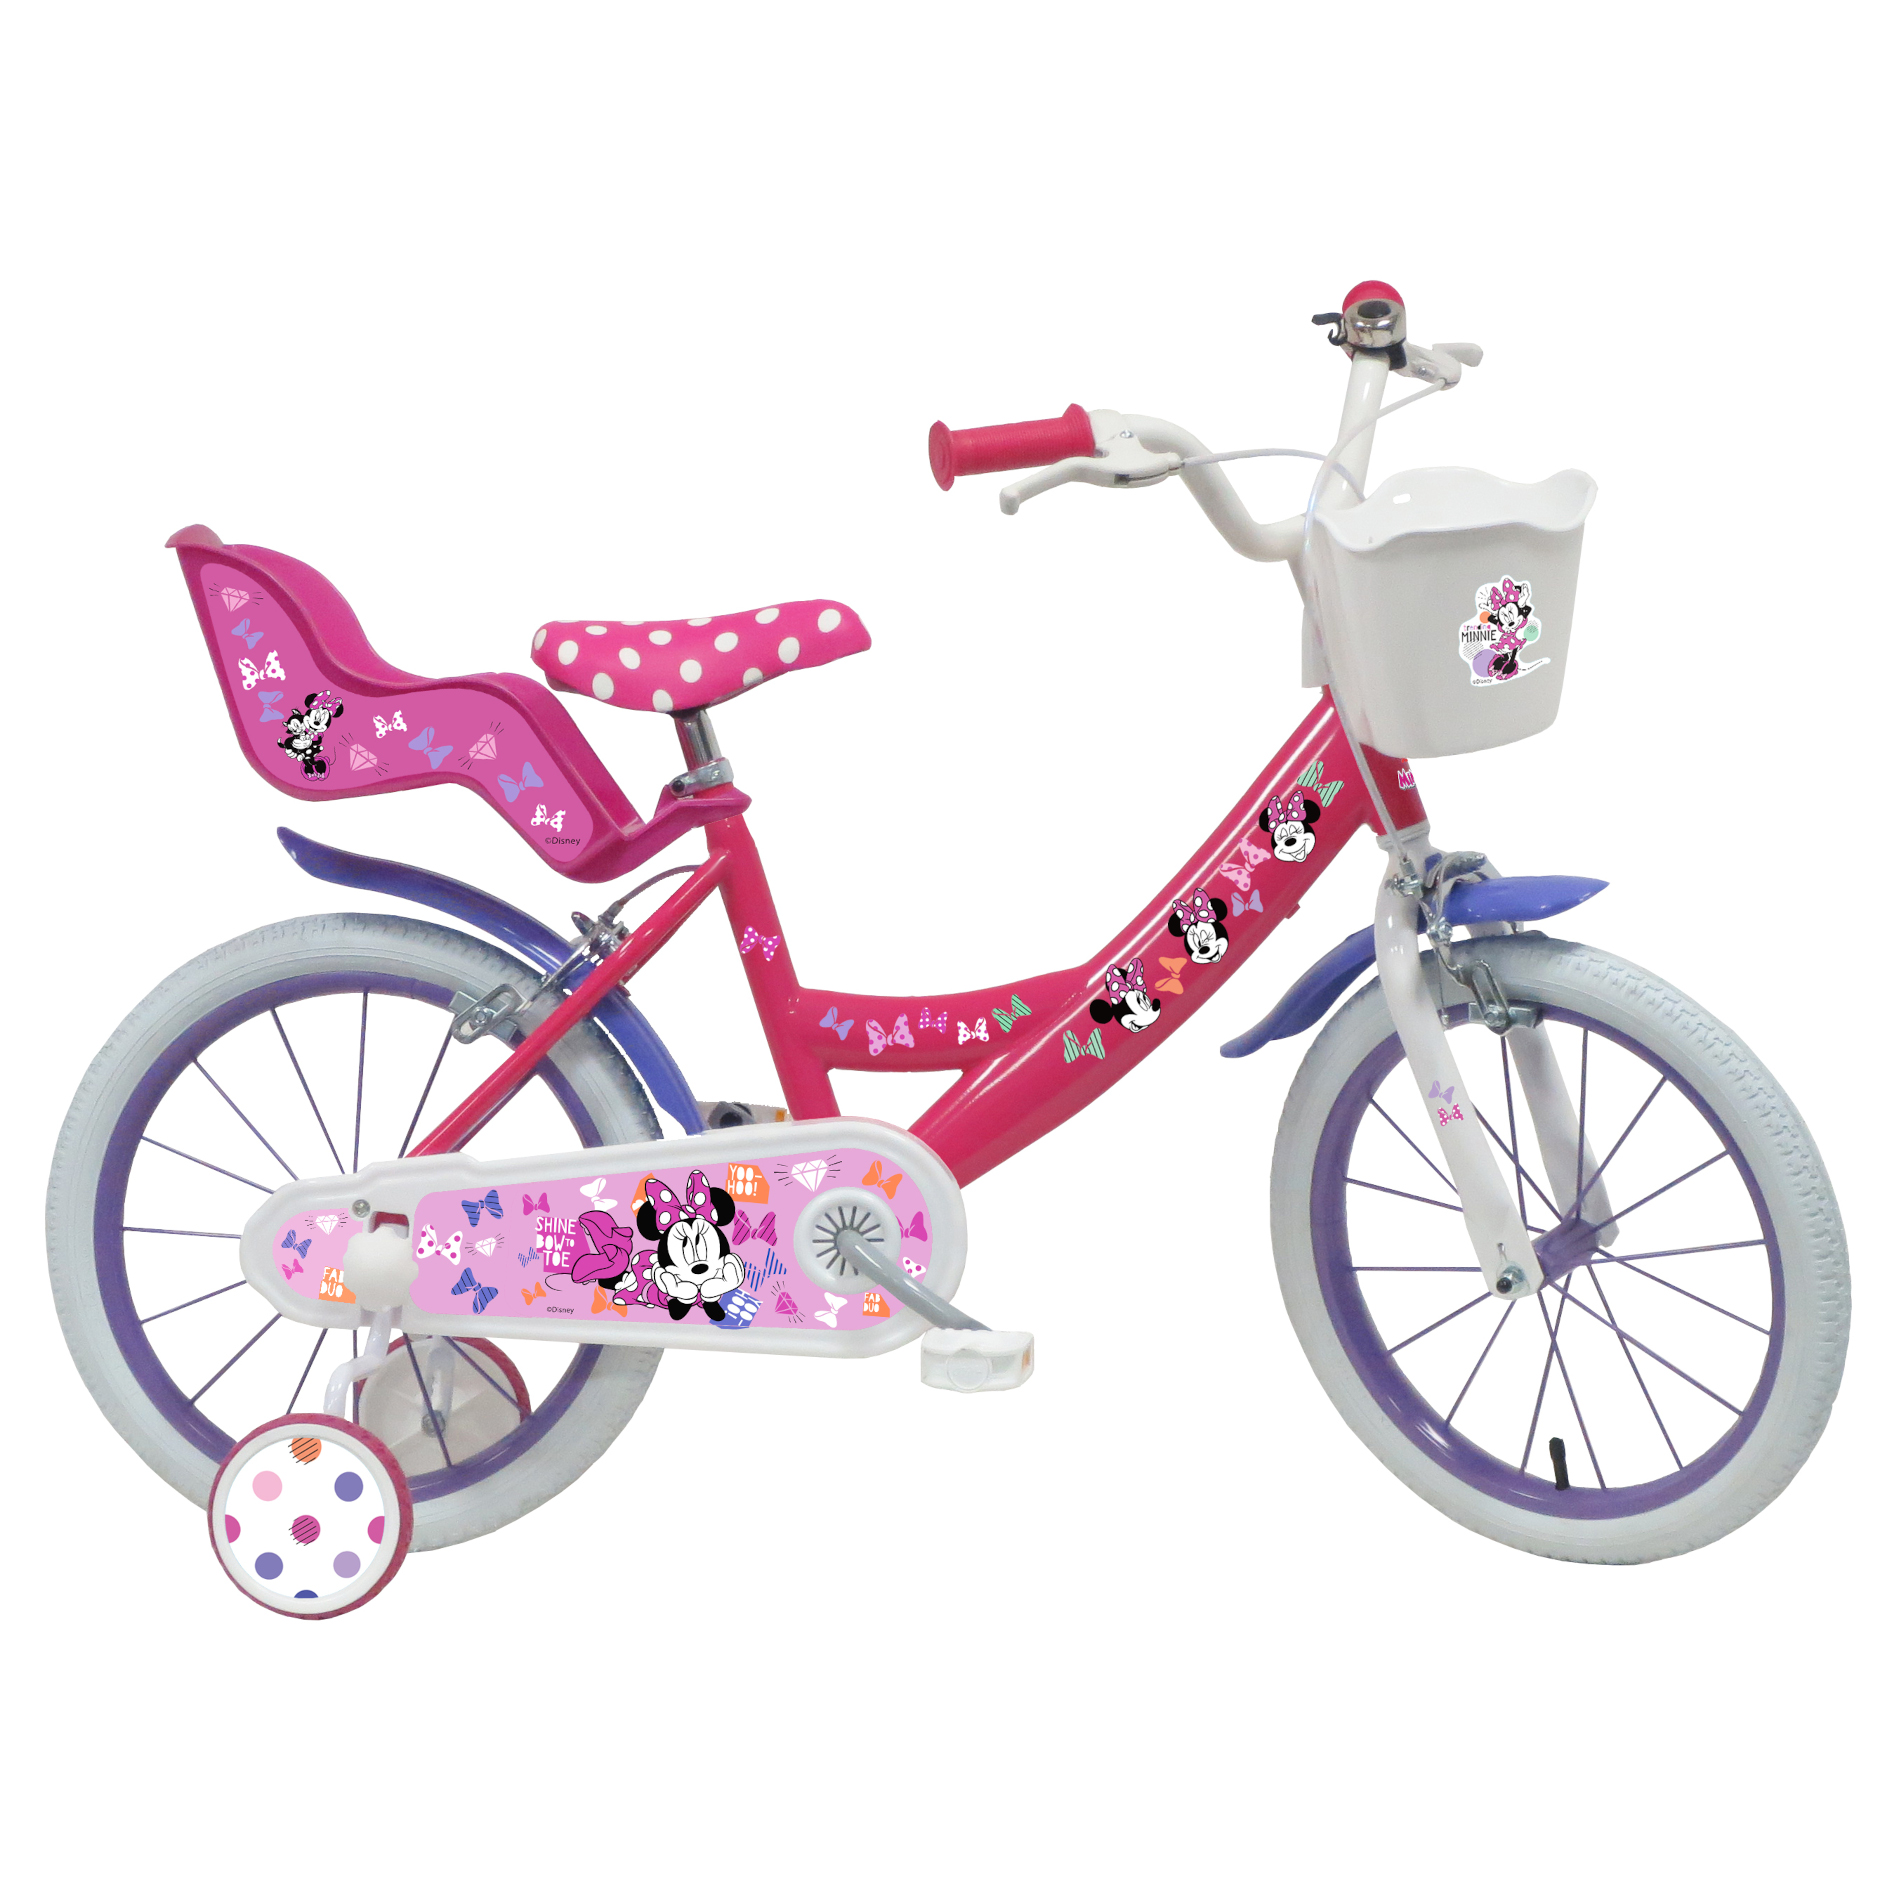 Bicicleta Niña 16 Pulgadas Minnie Mouse 5-7 Años - Rosa